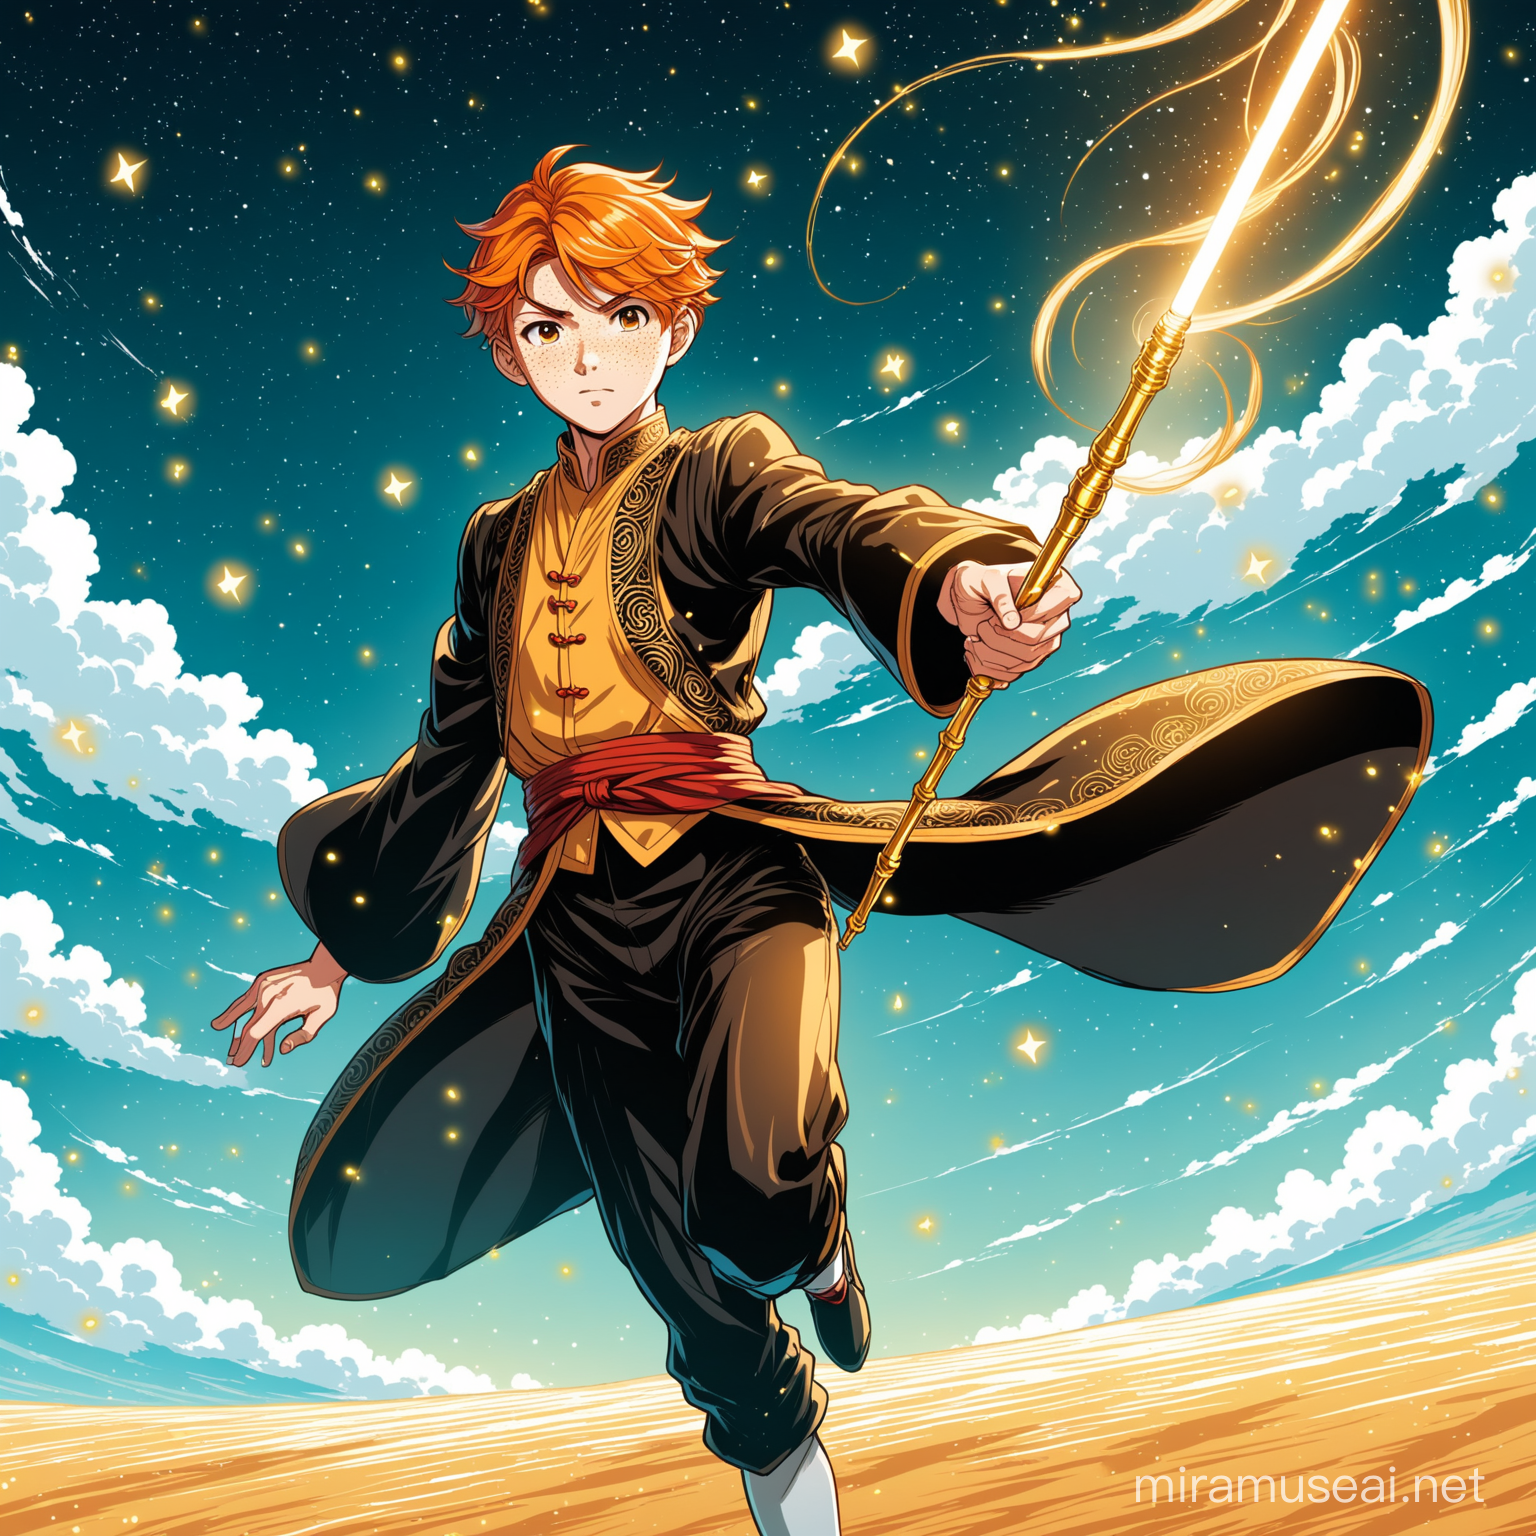 Enigmatic Manga Magician Summoning Winds on Vast Plain